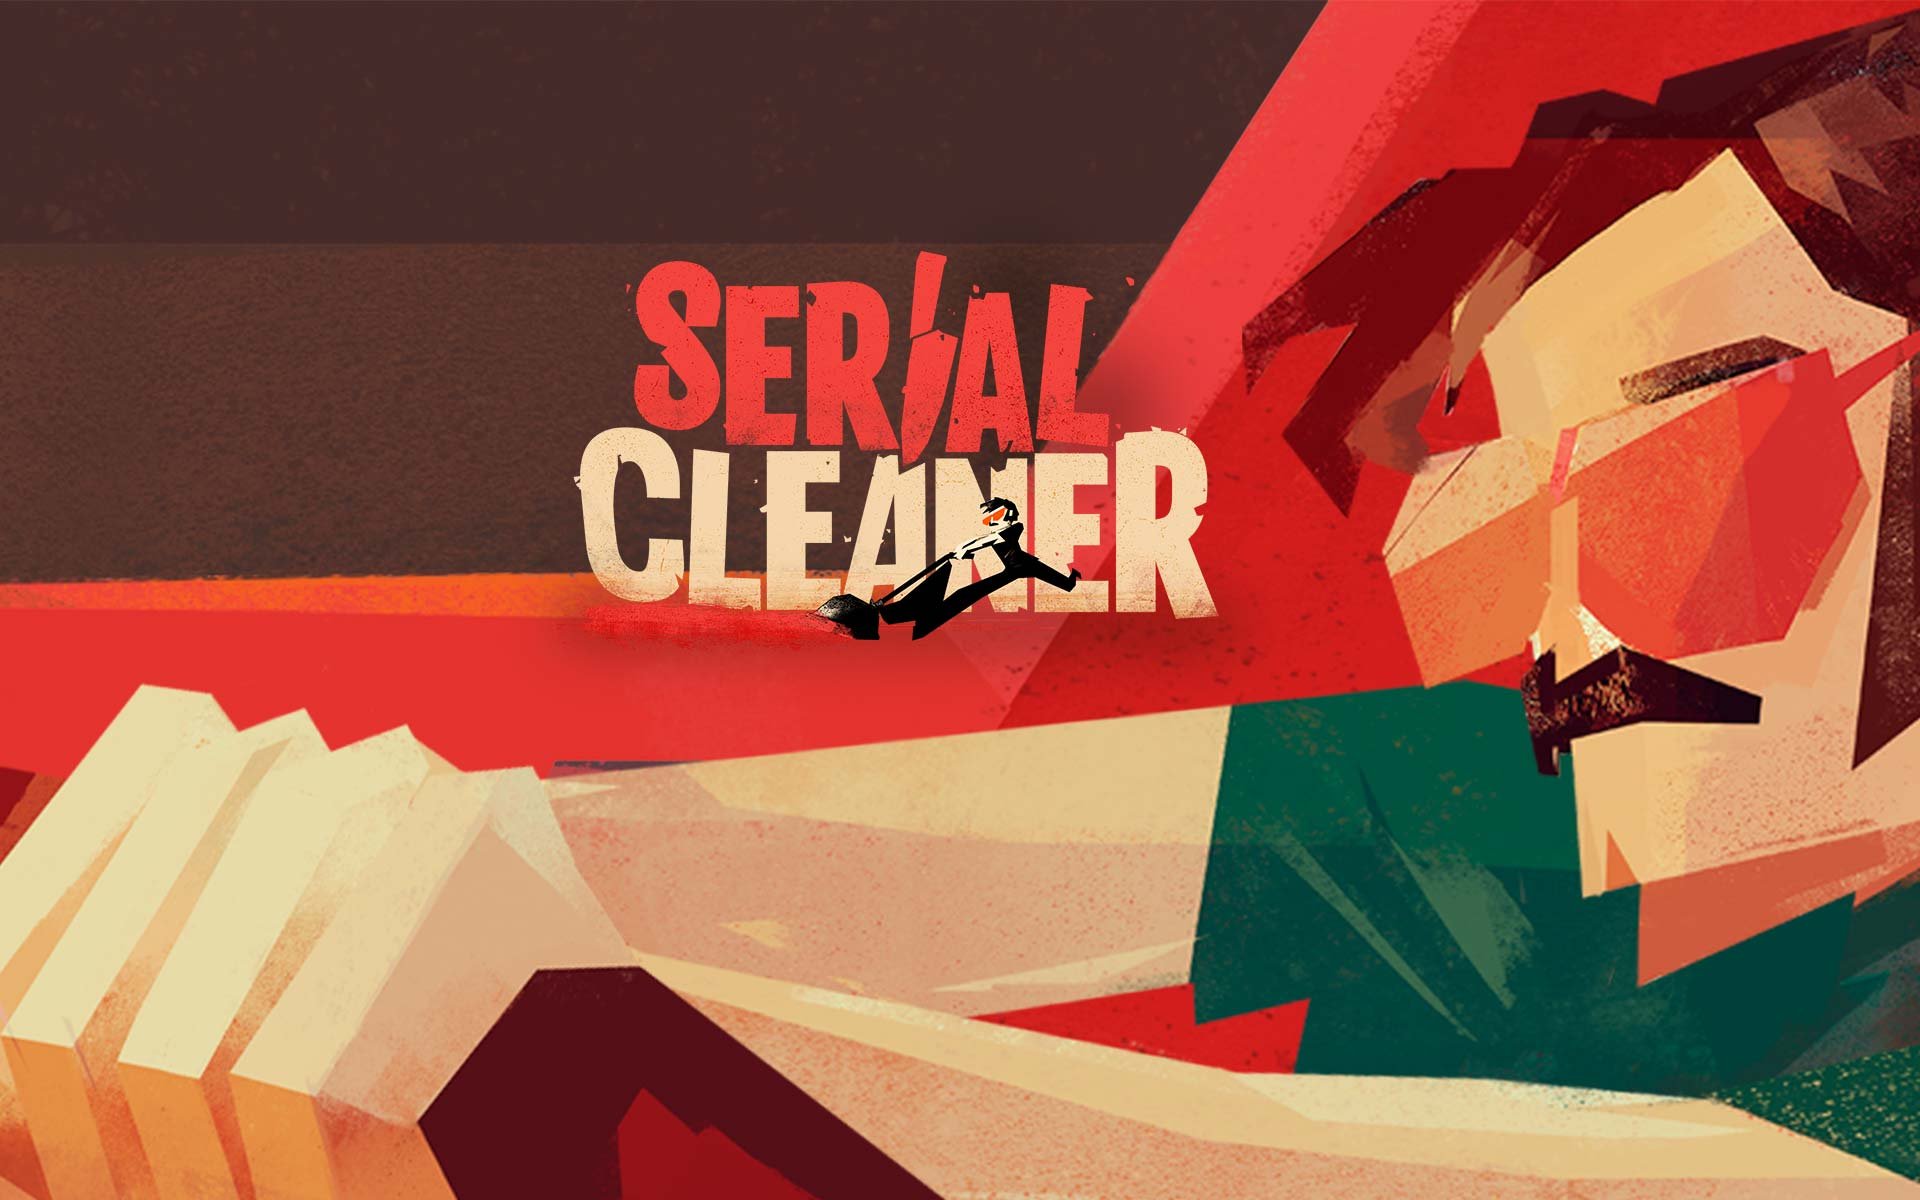 Compre Serial Cleaner a partir de R$ 27.99